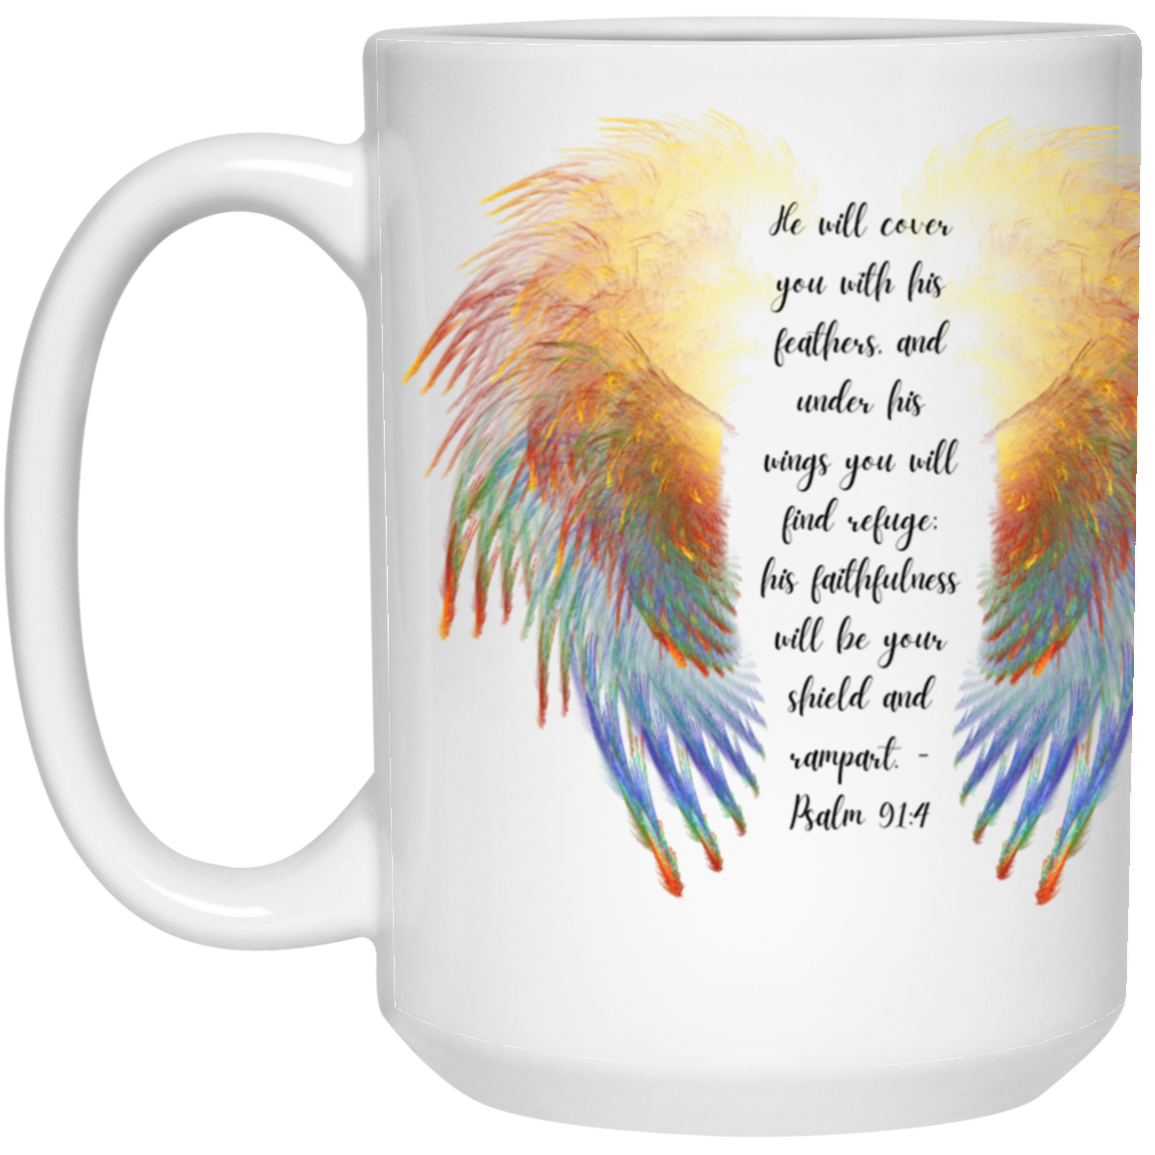 Psalm 91:4 15 oz. White Mug